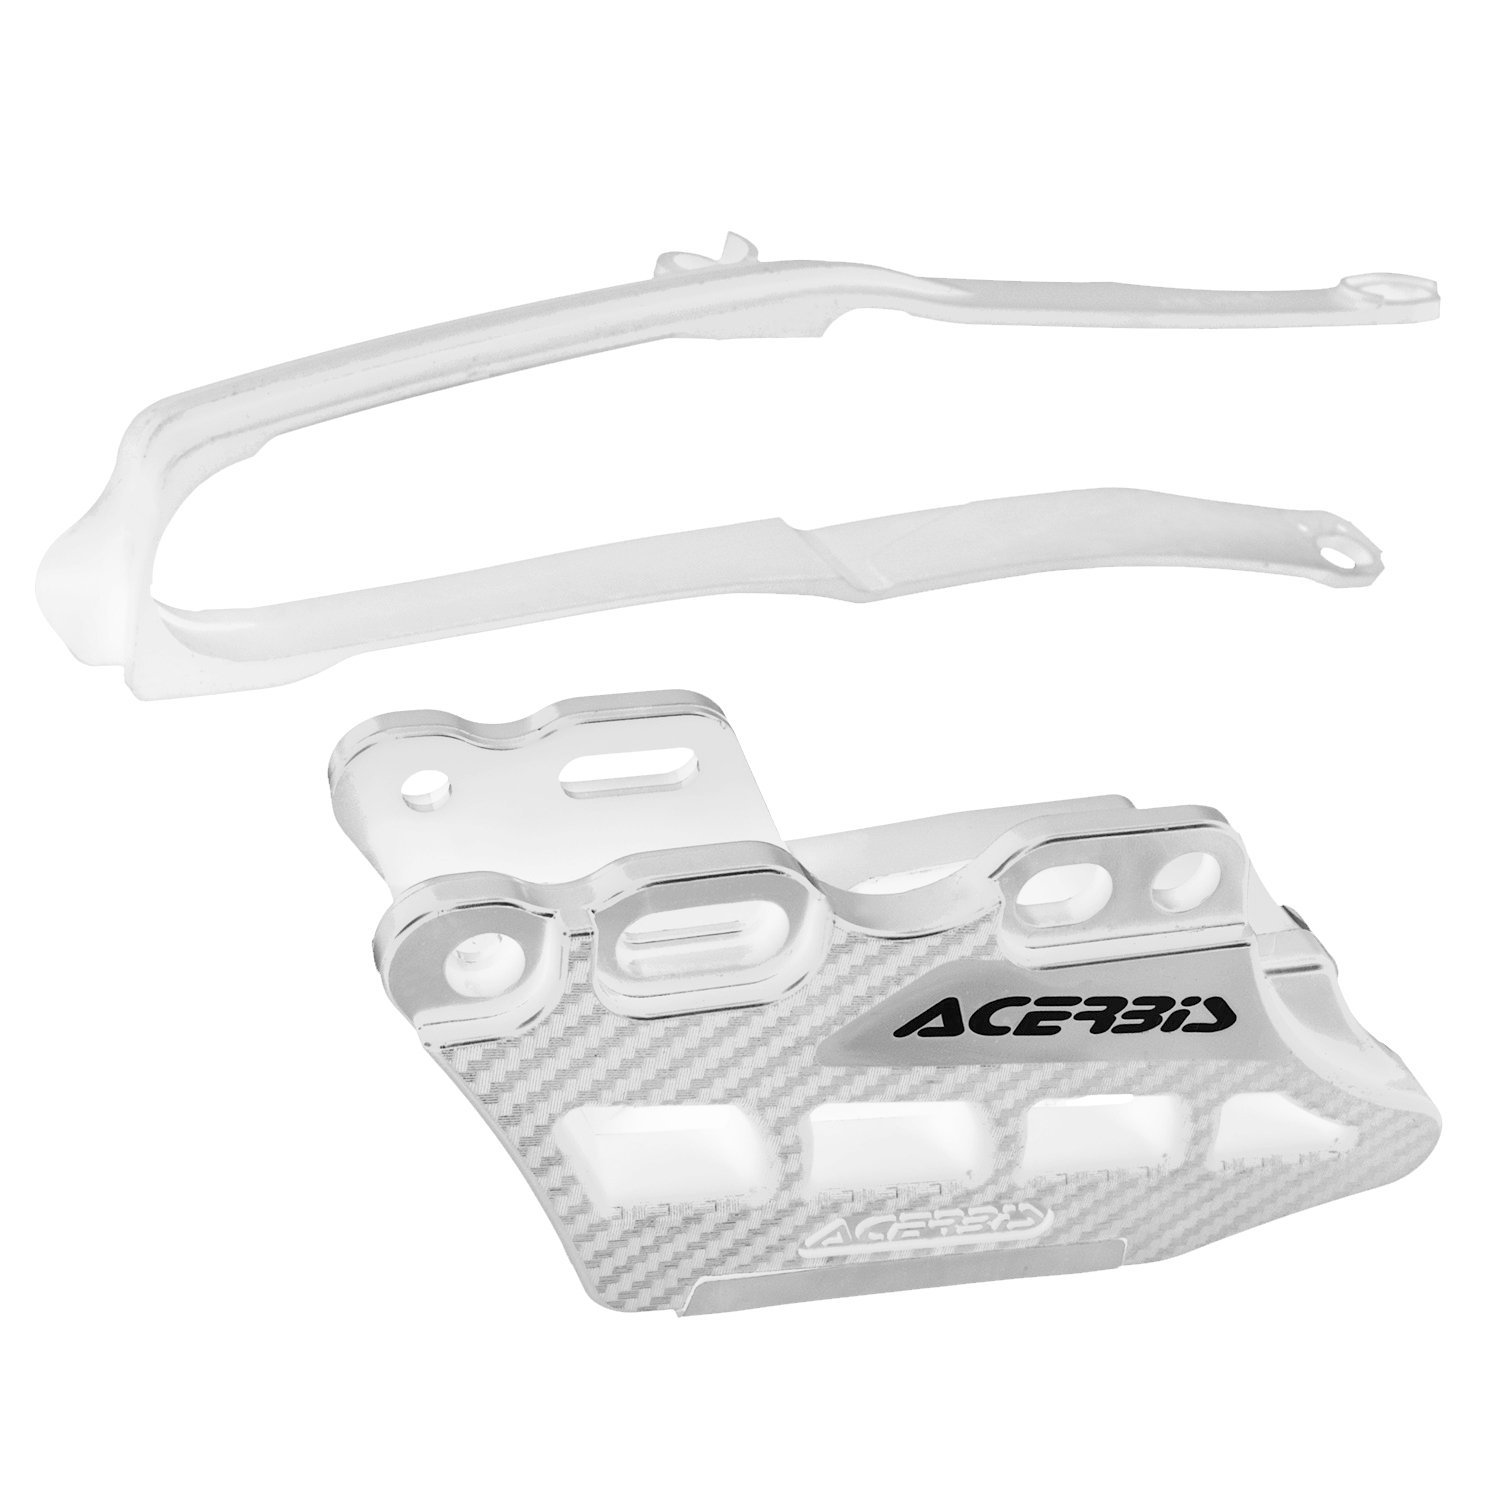 Acerbis Kit Patin + Guide Chaîne  Honda CRF 250/450, Blanc